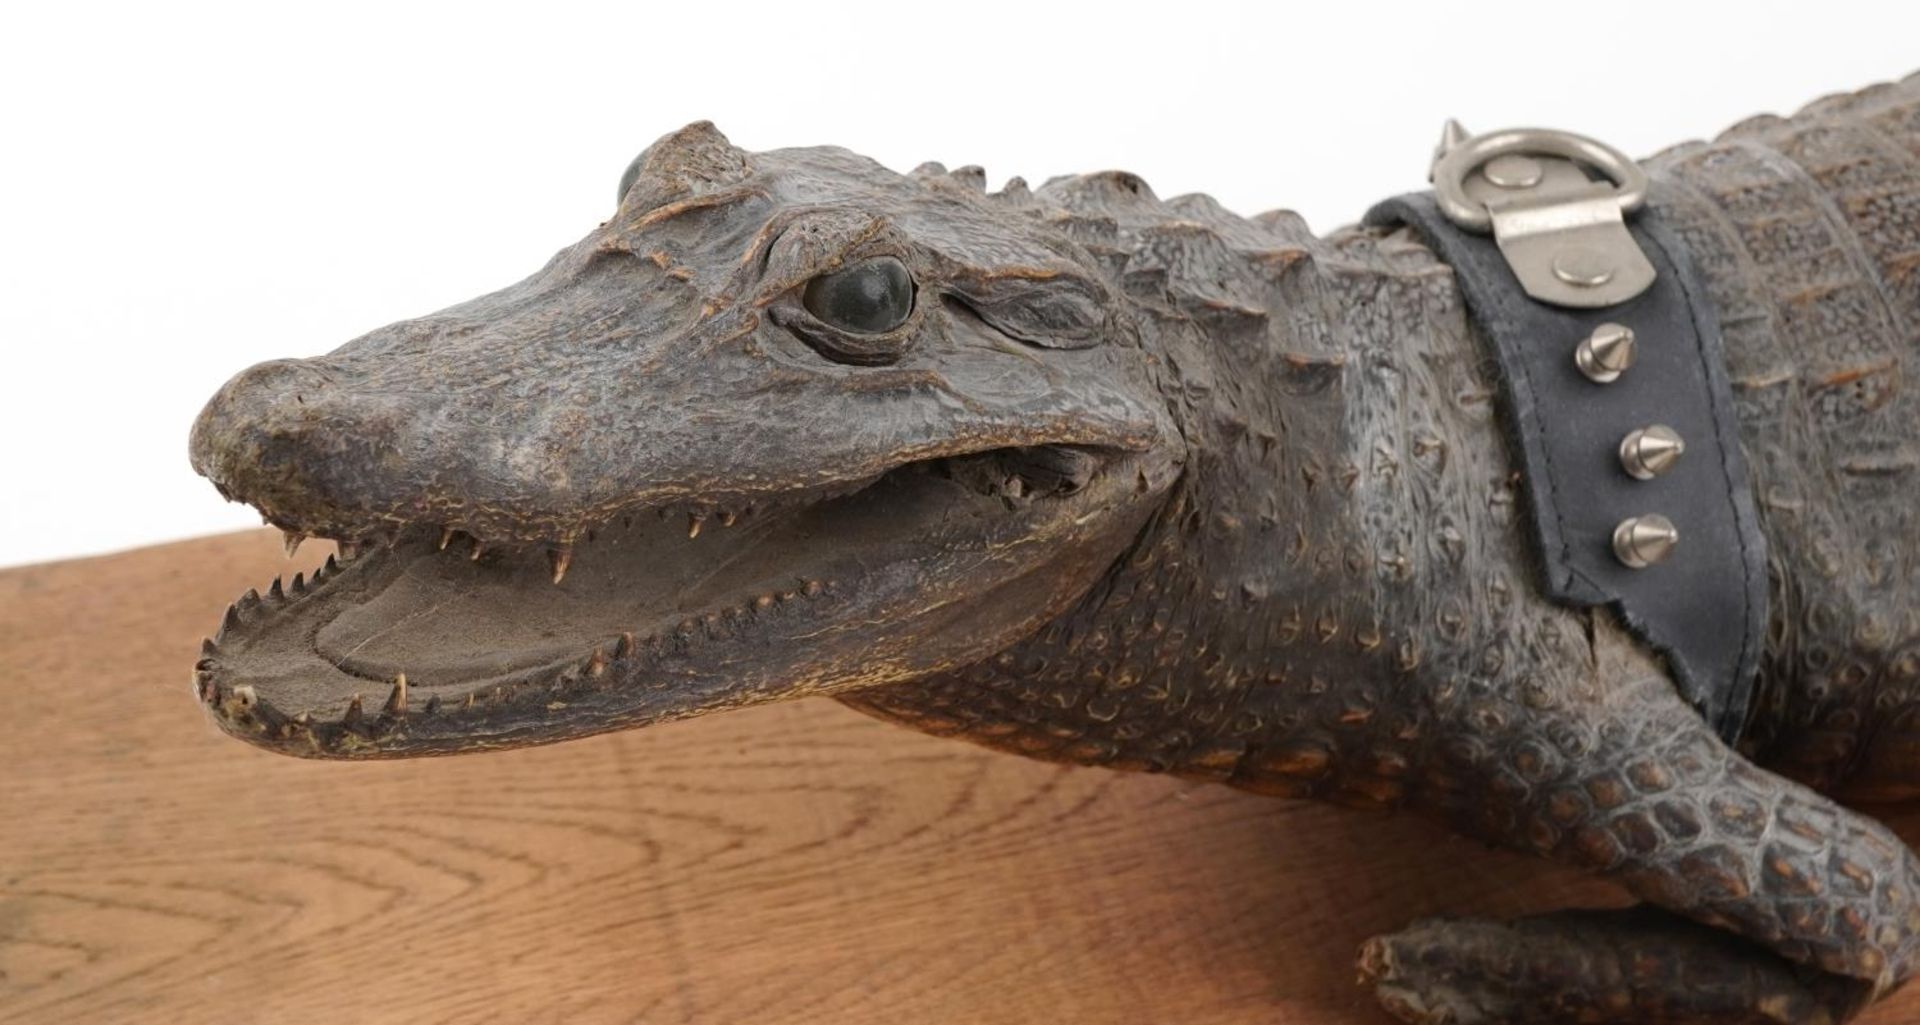 Taxidermy interest crocodile on hardwood base, 94.5cm in length - Image 2 of 3